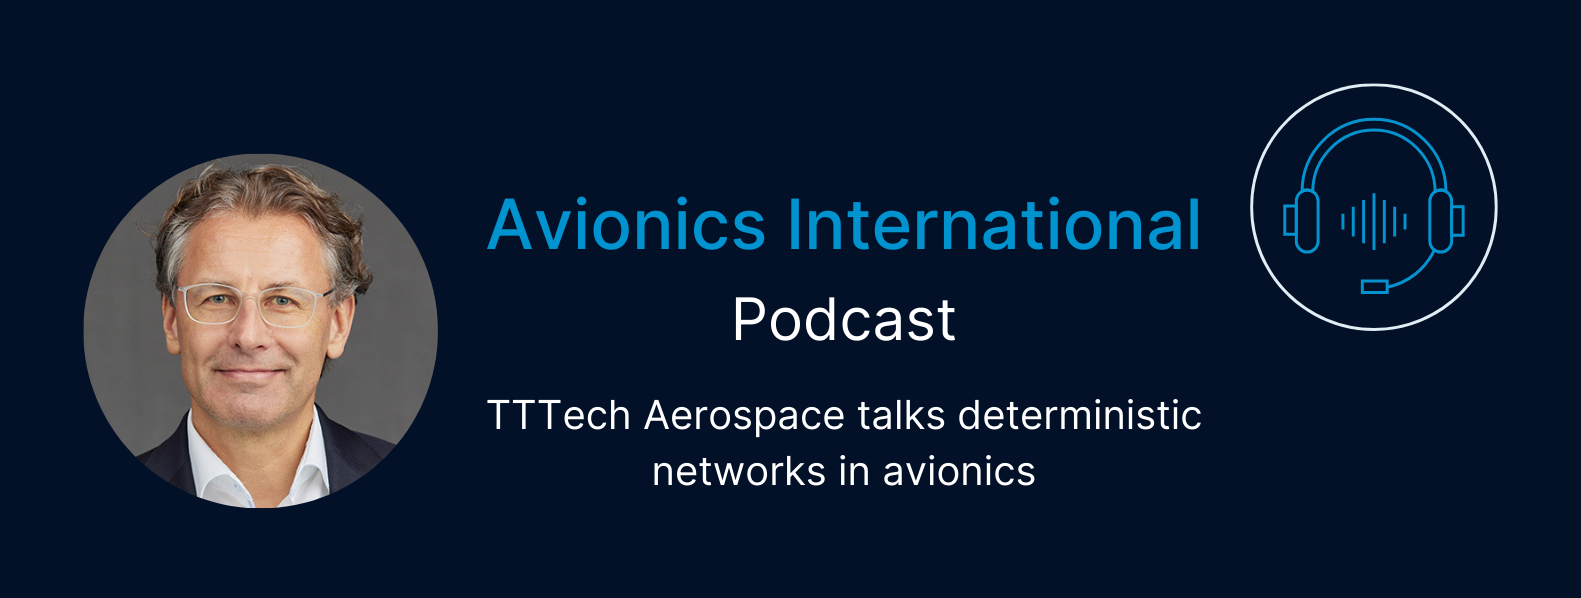 Listen to the podcast interview on Avionics International's website